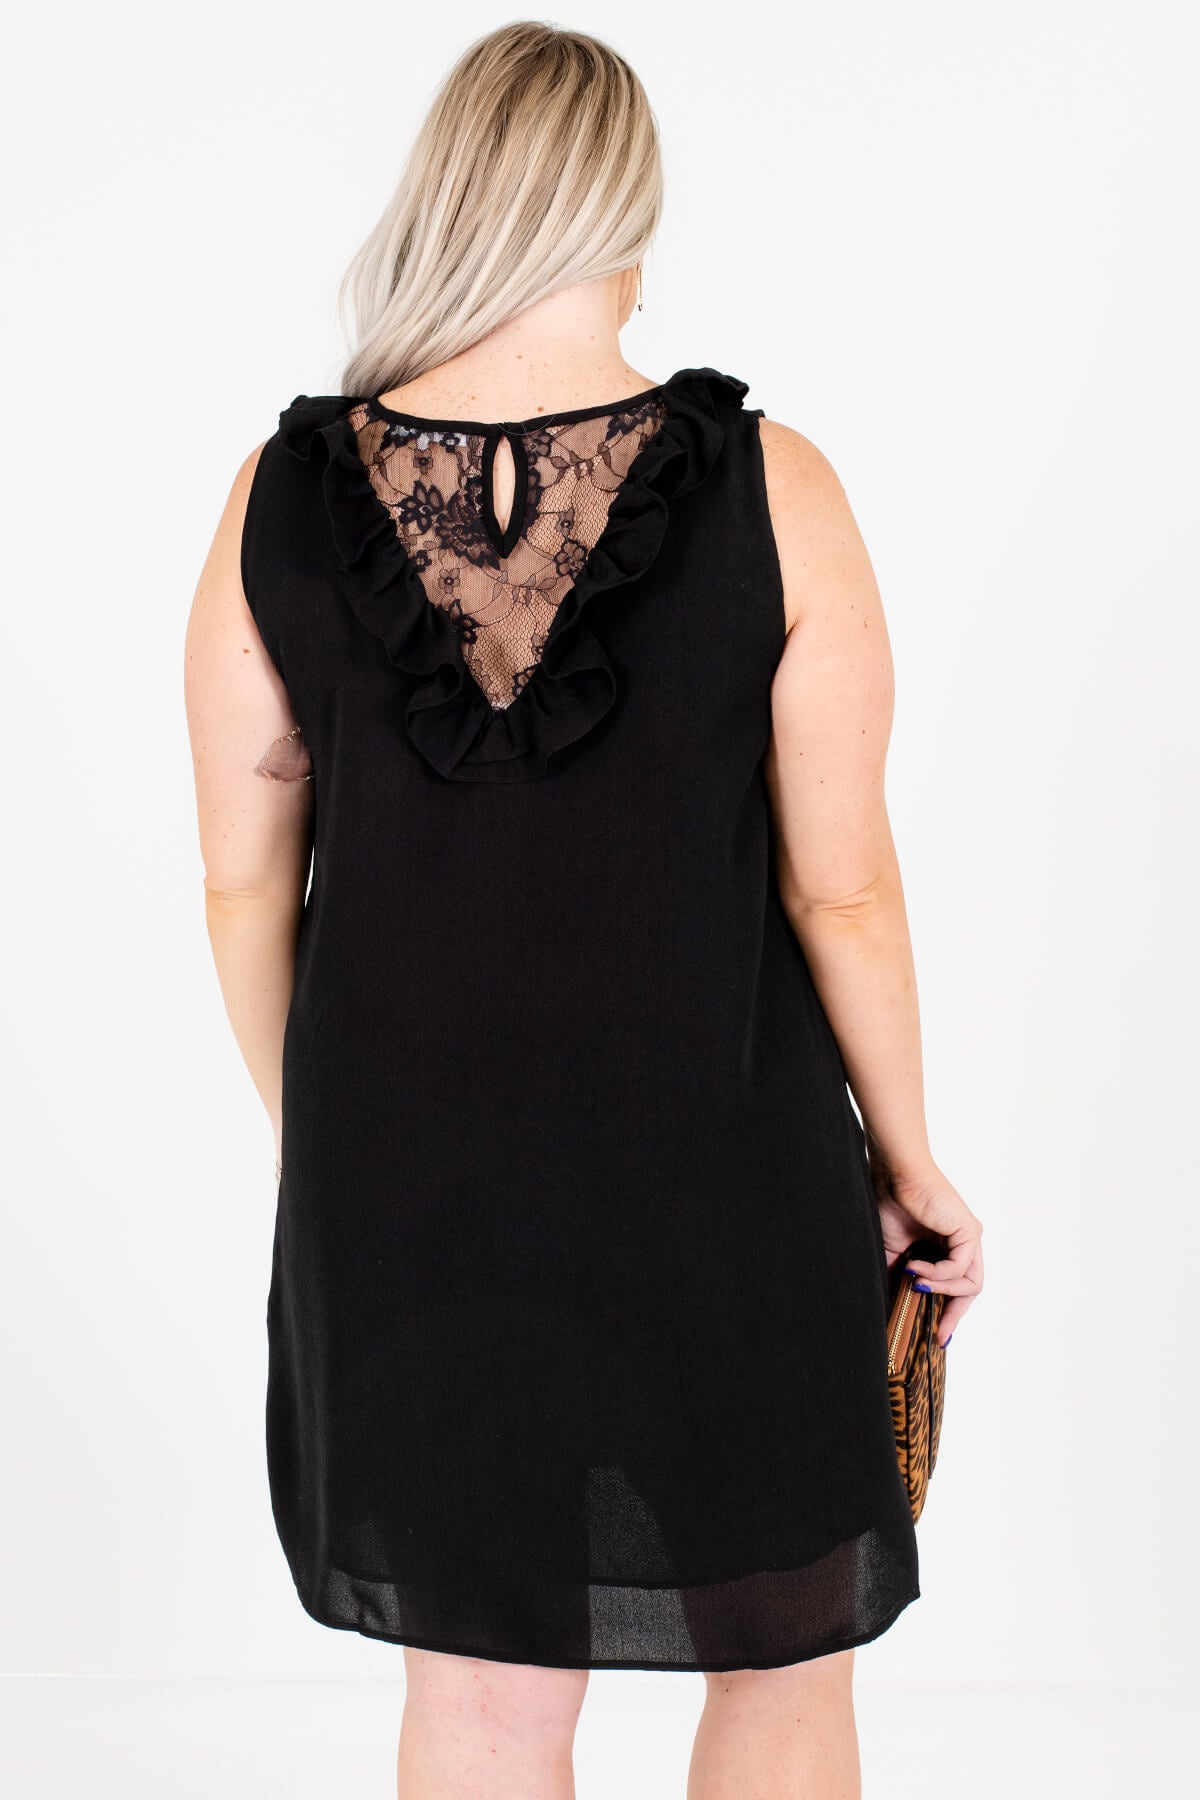 Women's Black Ruffled Accented Plus Size Boutique Mini Dress